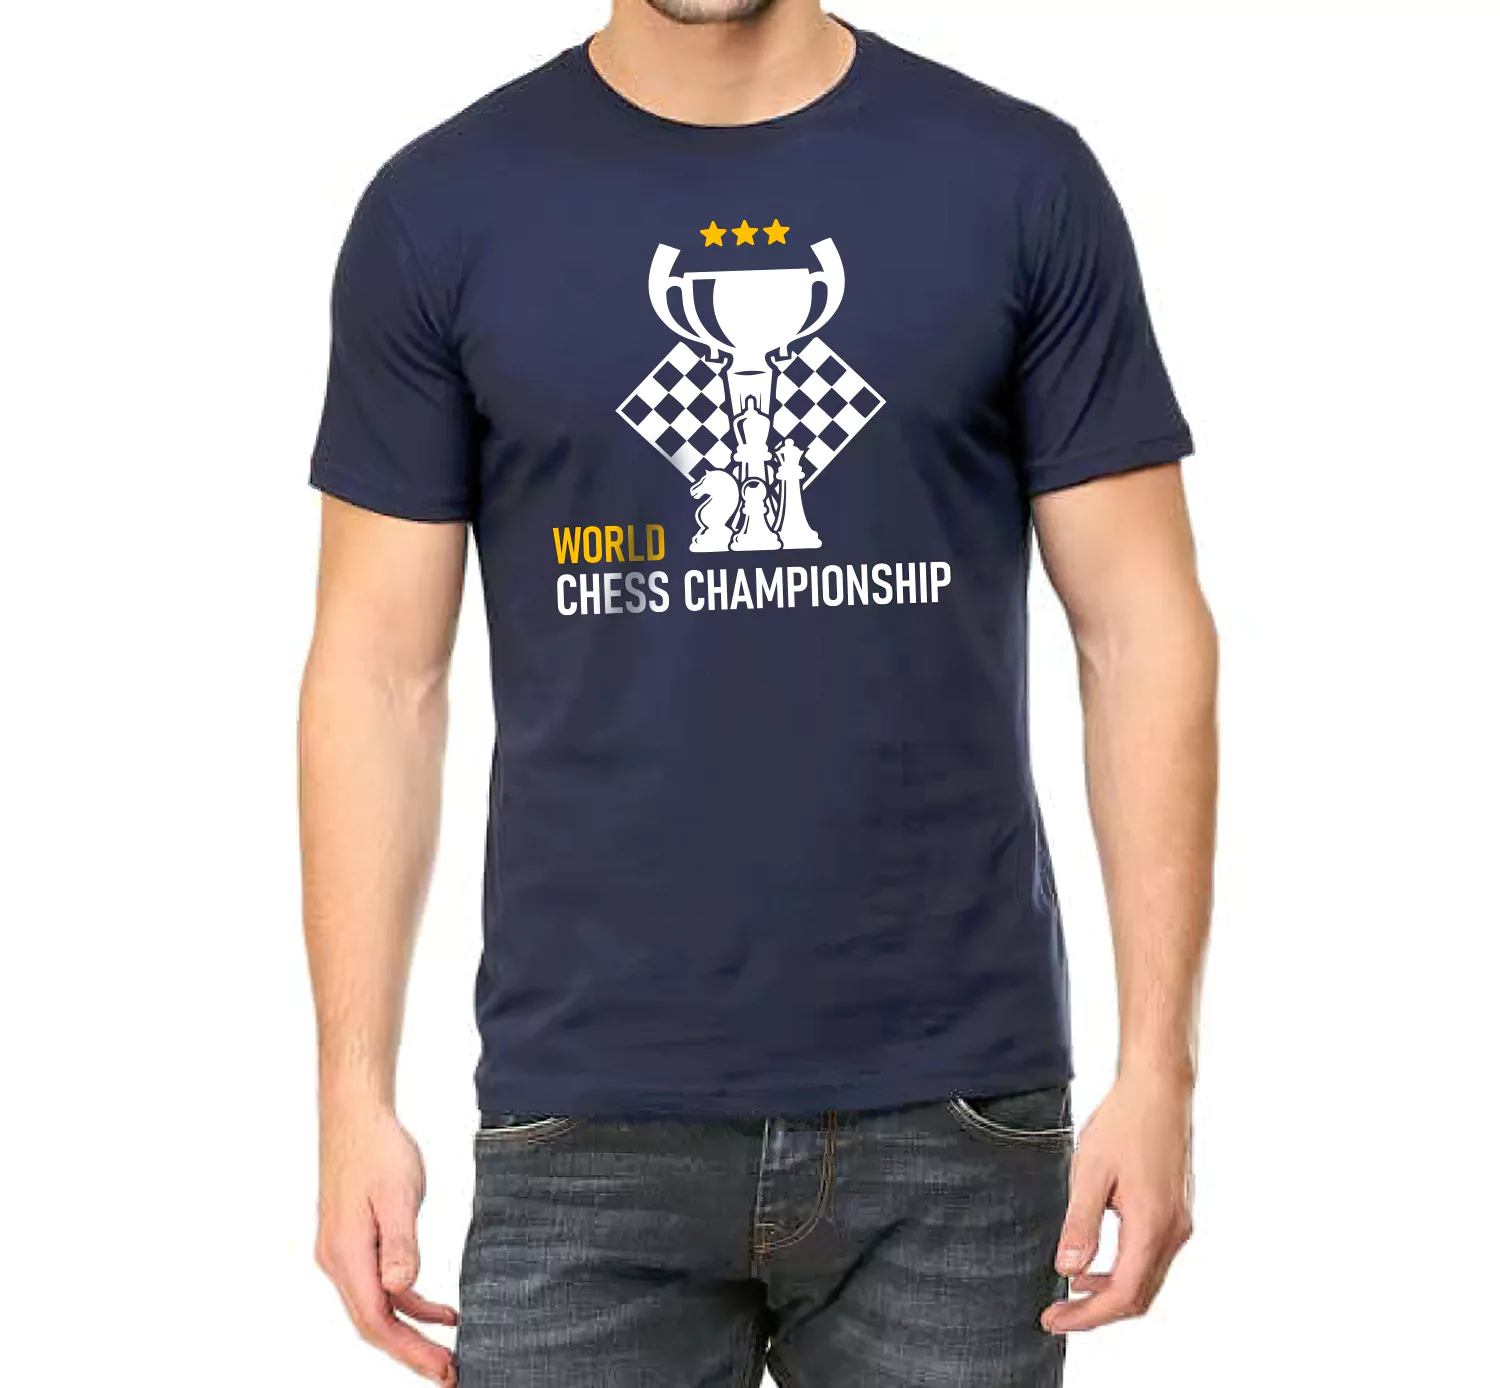 world chess championship t shirt for man